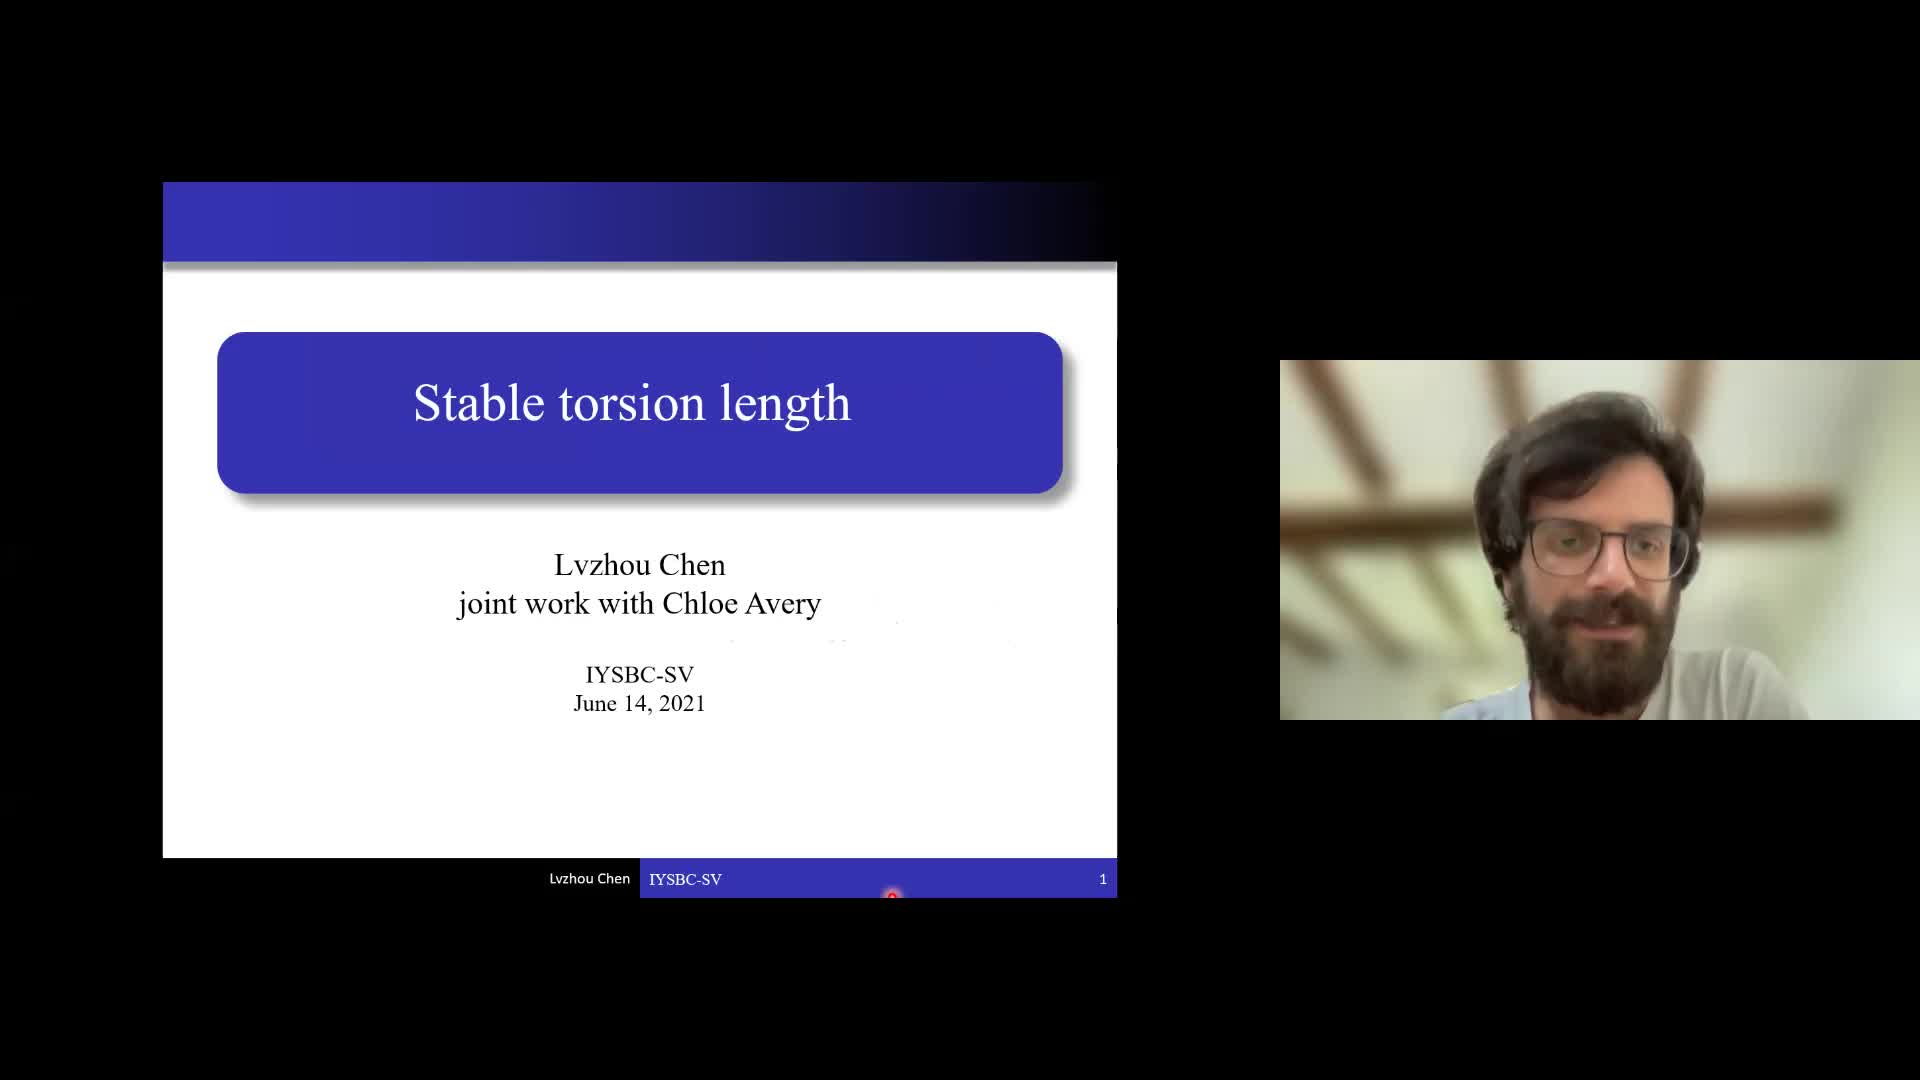 Stable torsion length